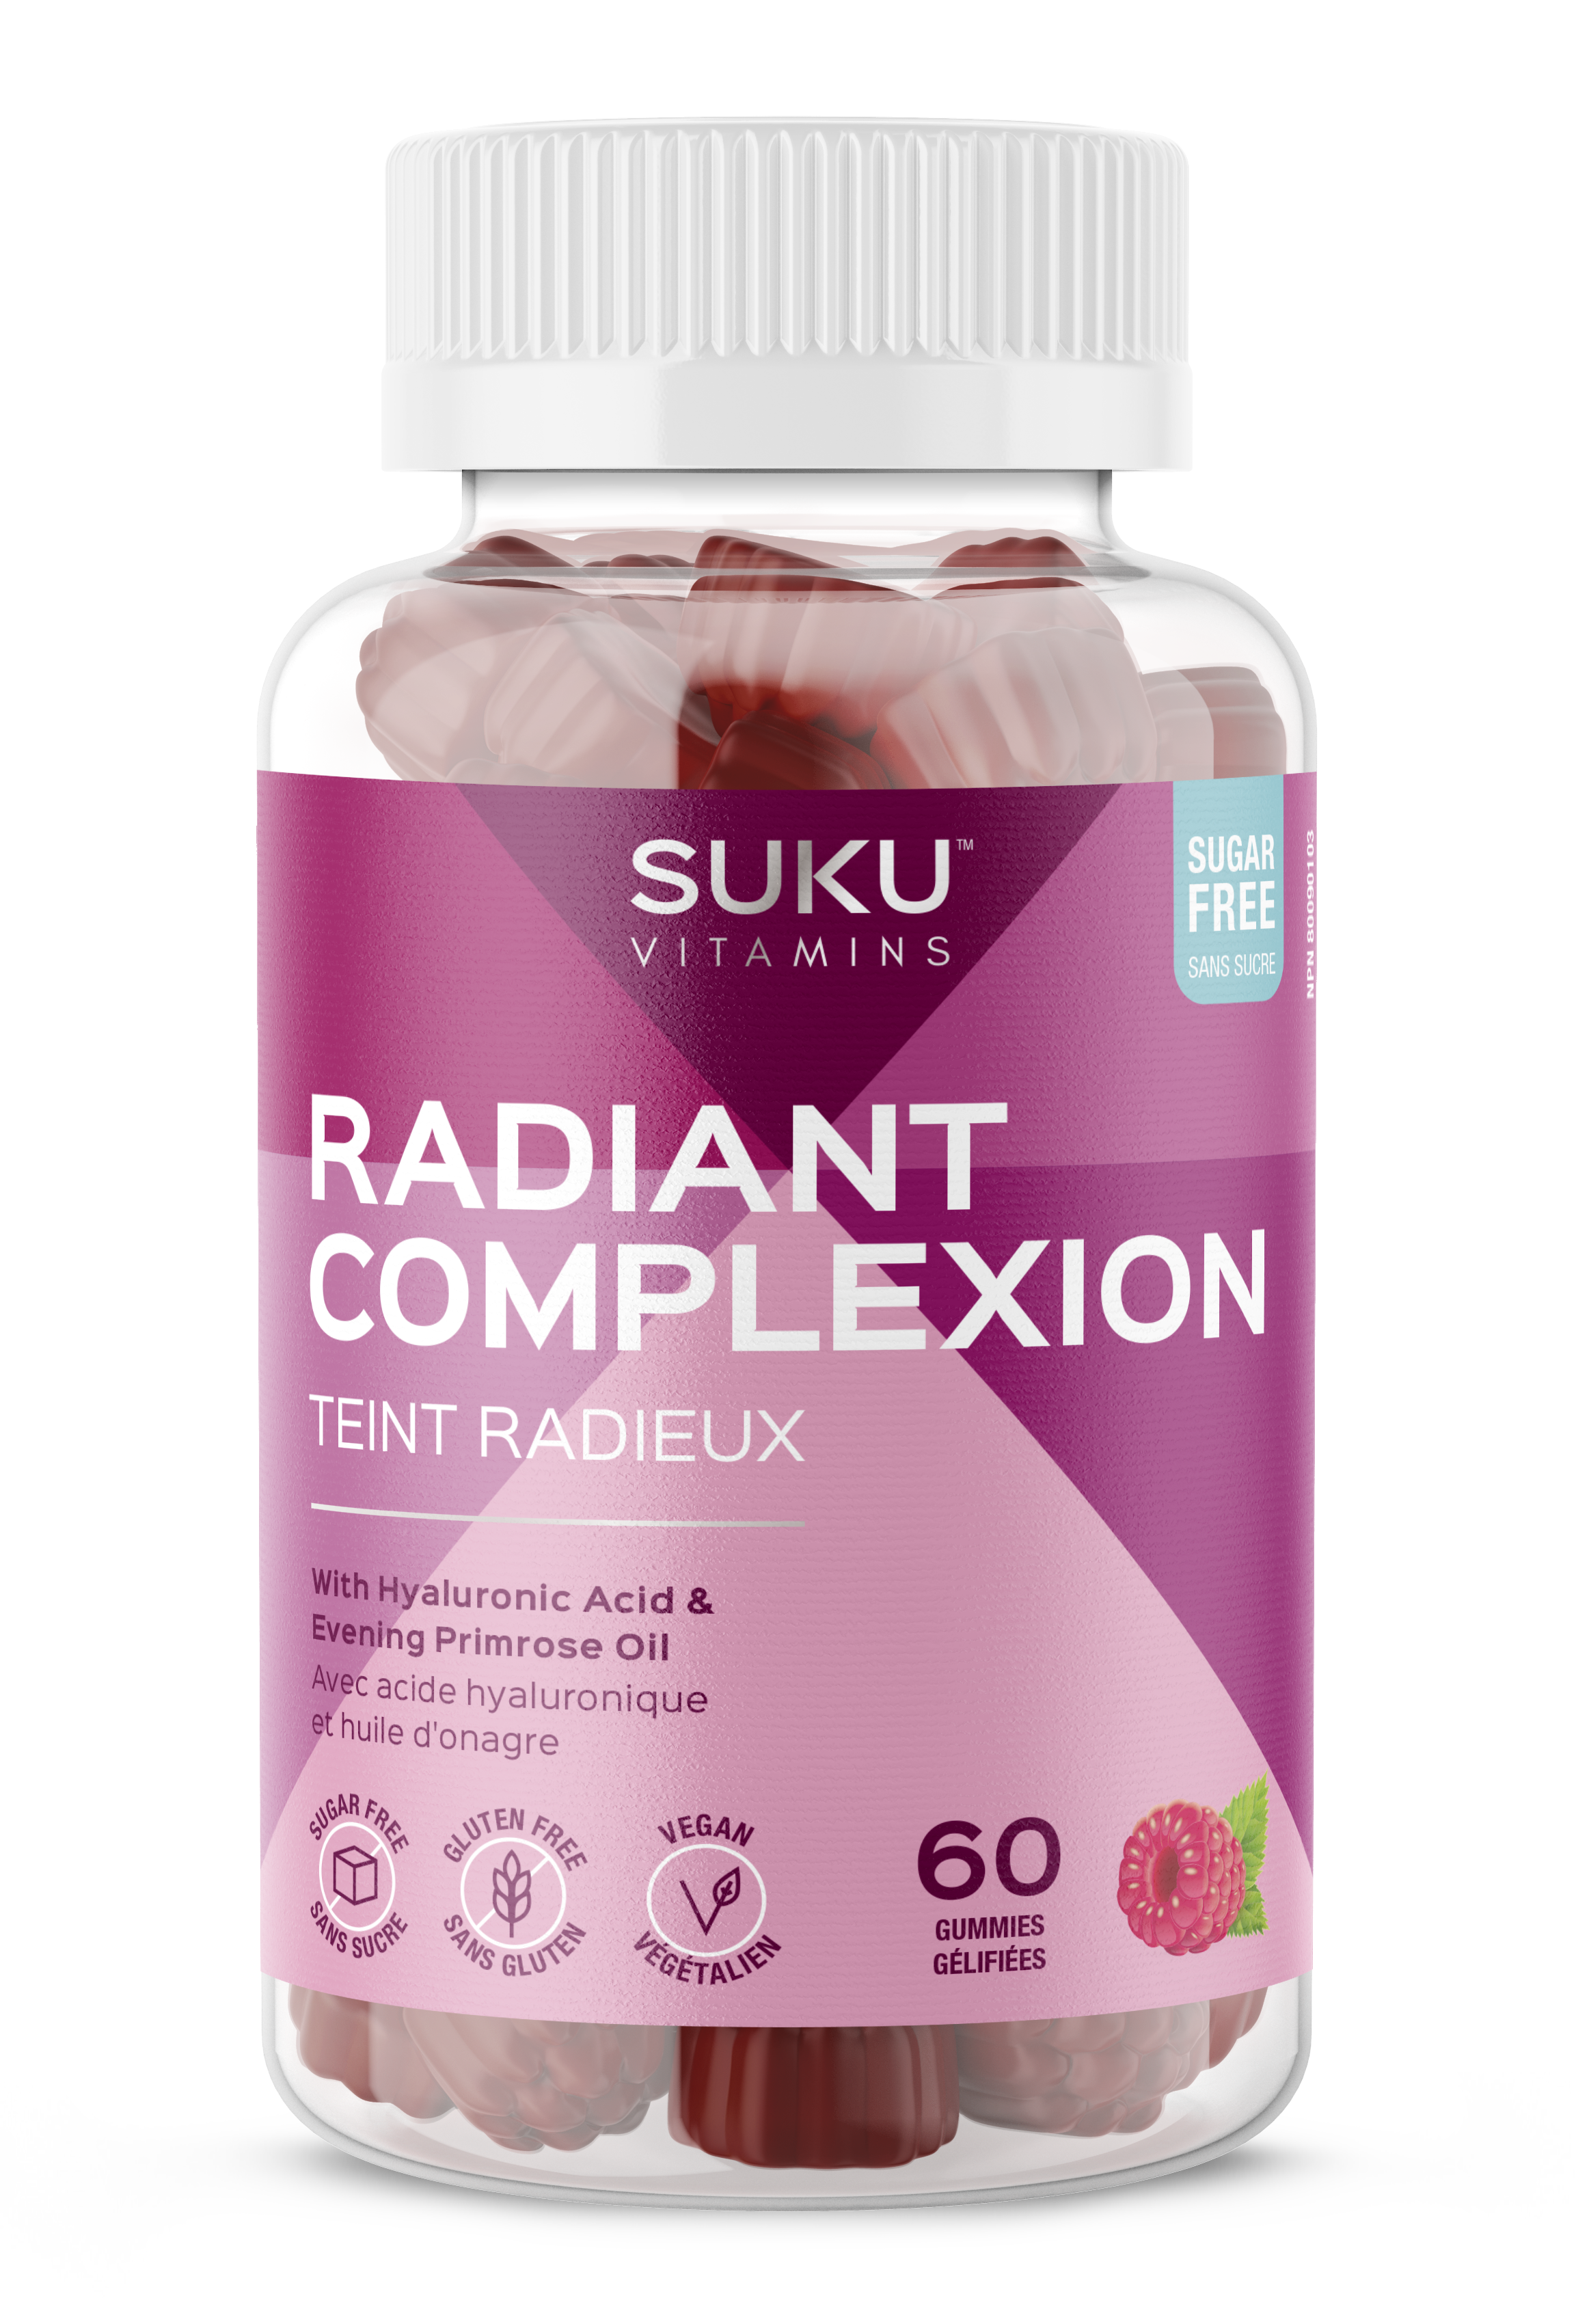 SUKU Radiant Complexion 60 Gummies (Discontinued)